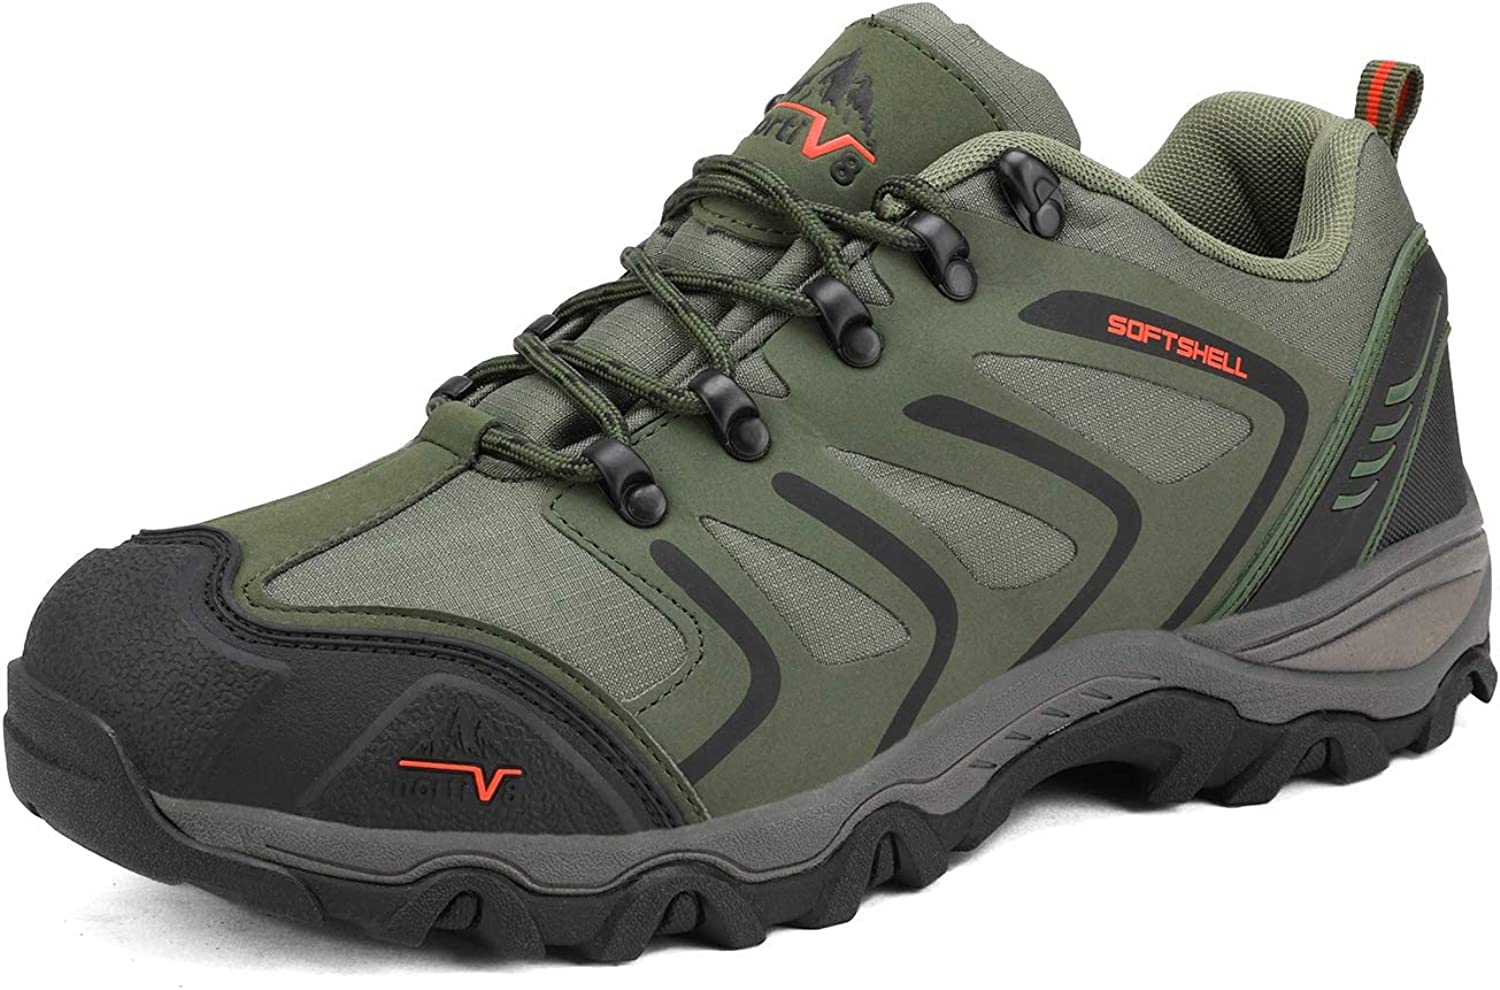 NORTIV 8 Men's Low Top Waterproof Hiking Shoes [...]